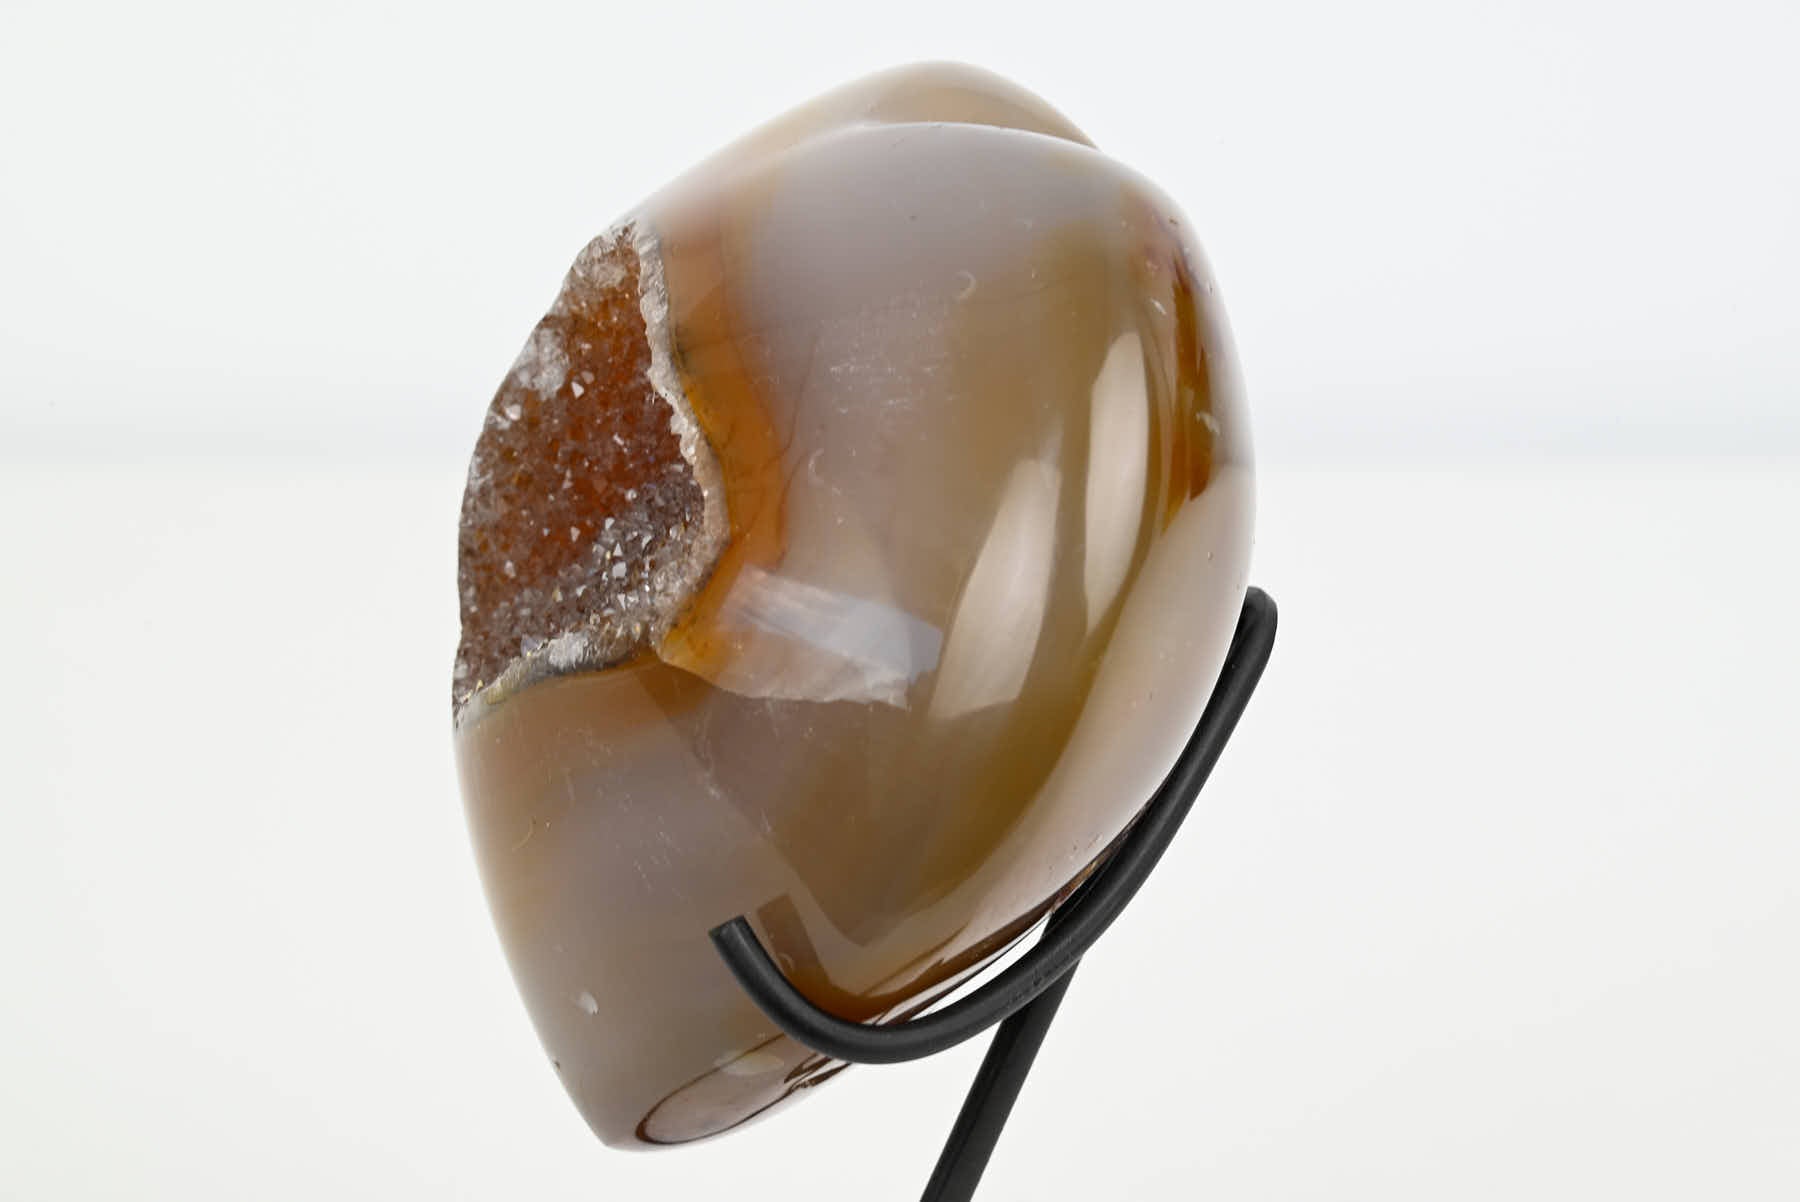 Extra Quality Agate Crystal Heart - 0.48kg, 11cm high - #HTAGAT-34020